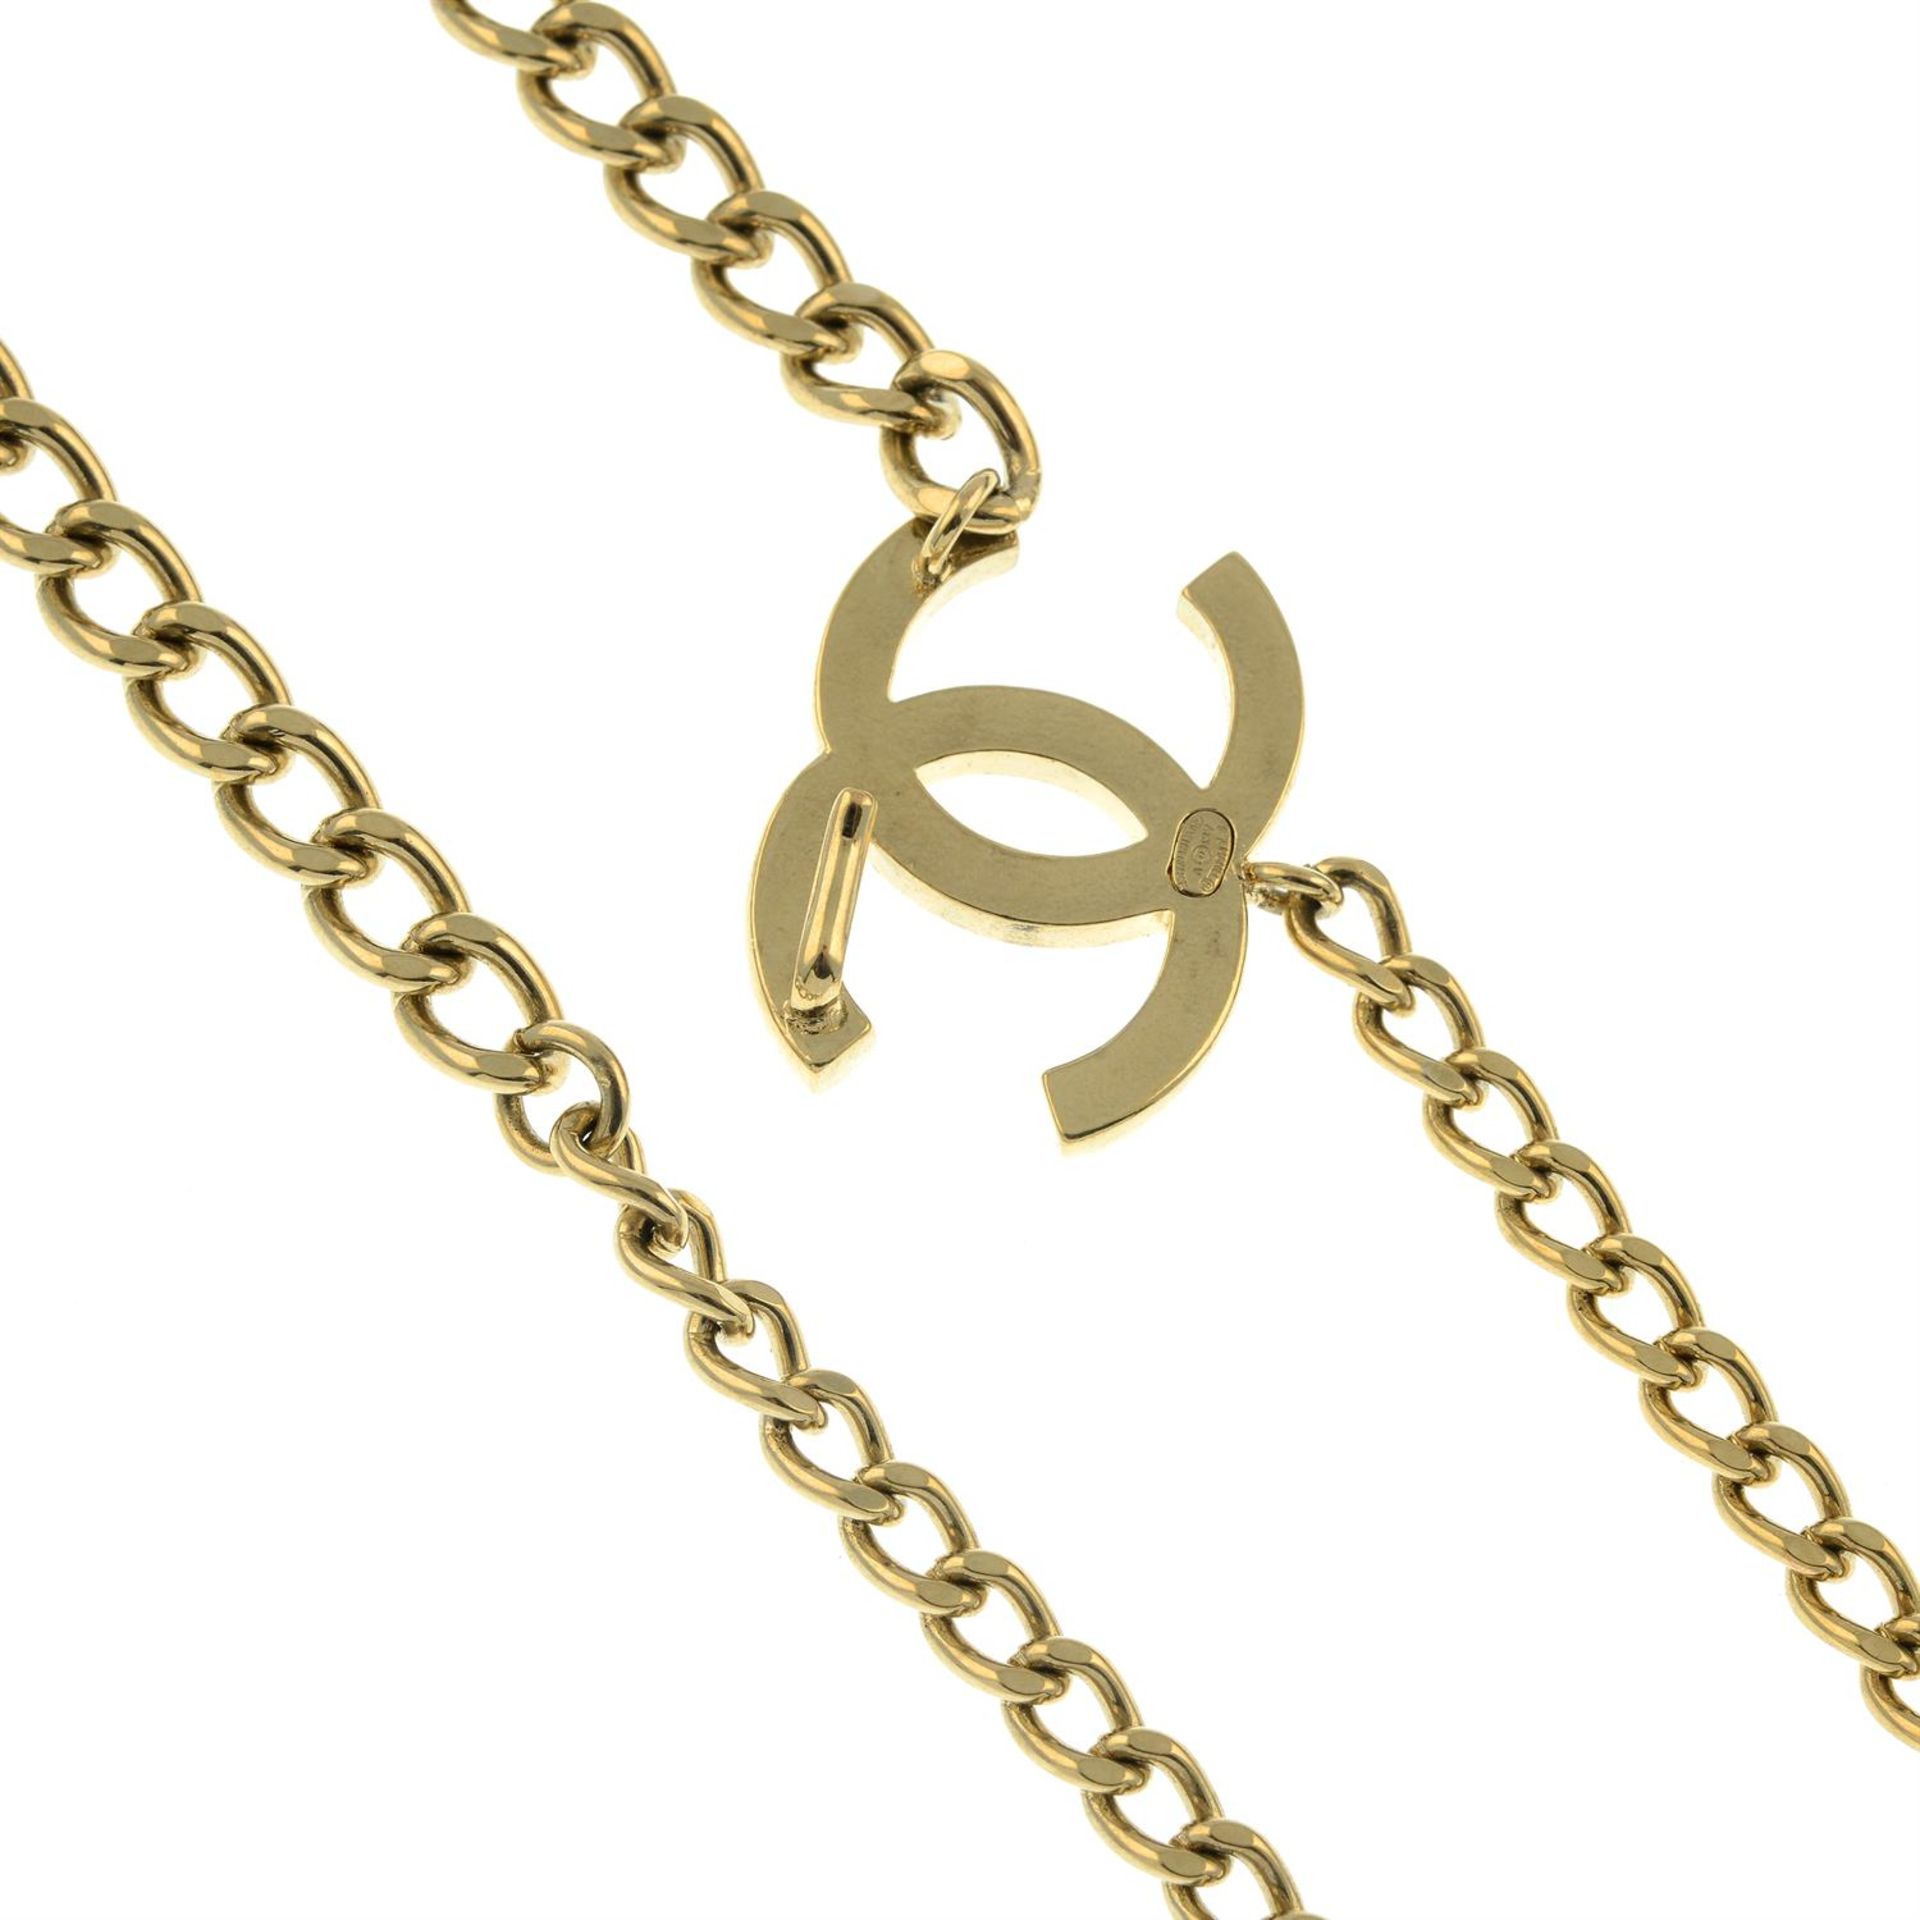 CHANEL - a CC logo chain belt. - Image 3 of 3